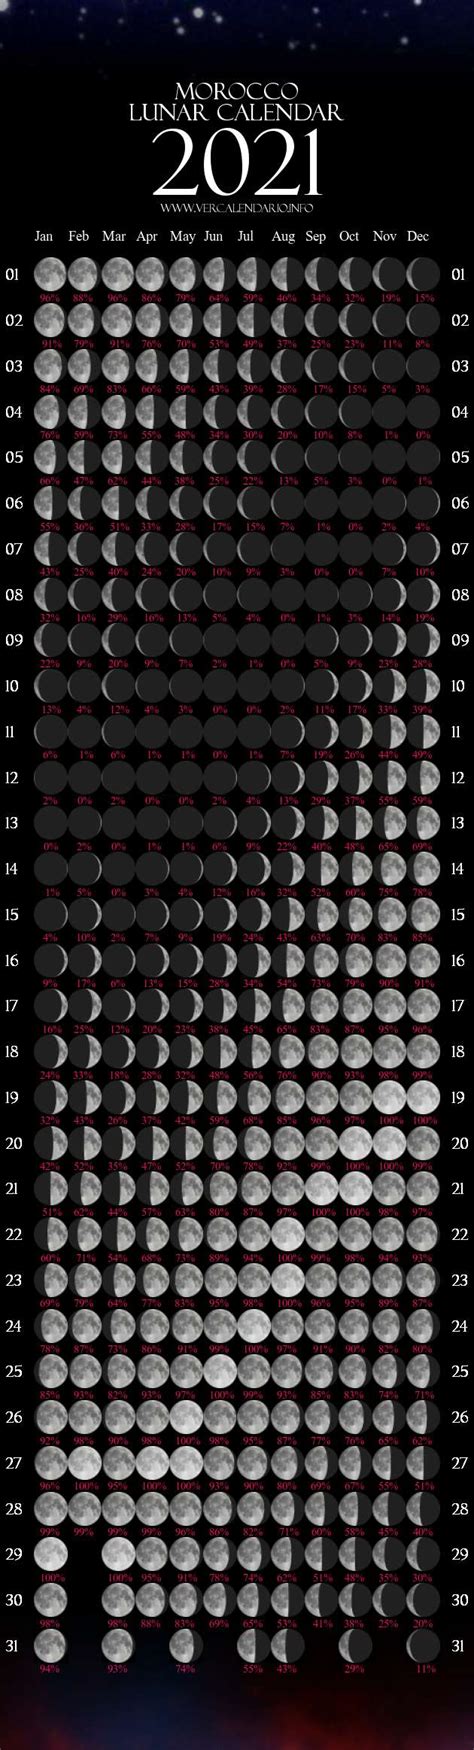 Perpetual lunar calendar north hemisphere. Lunar Calendar 2021 (Morocco)